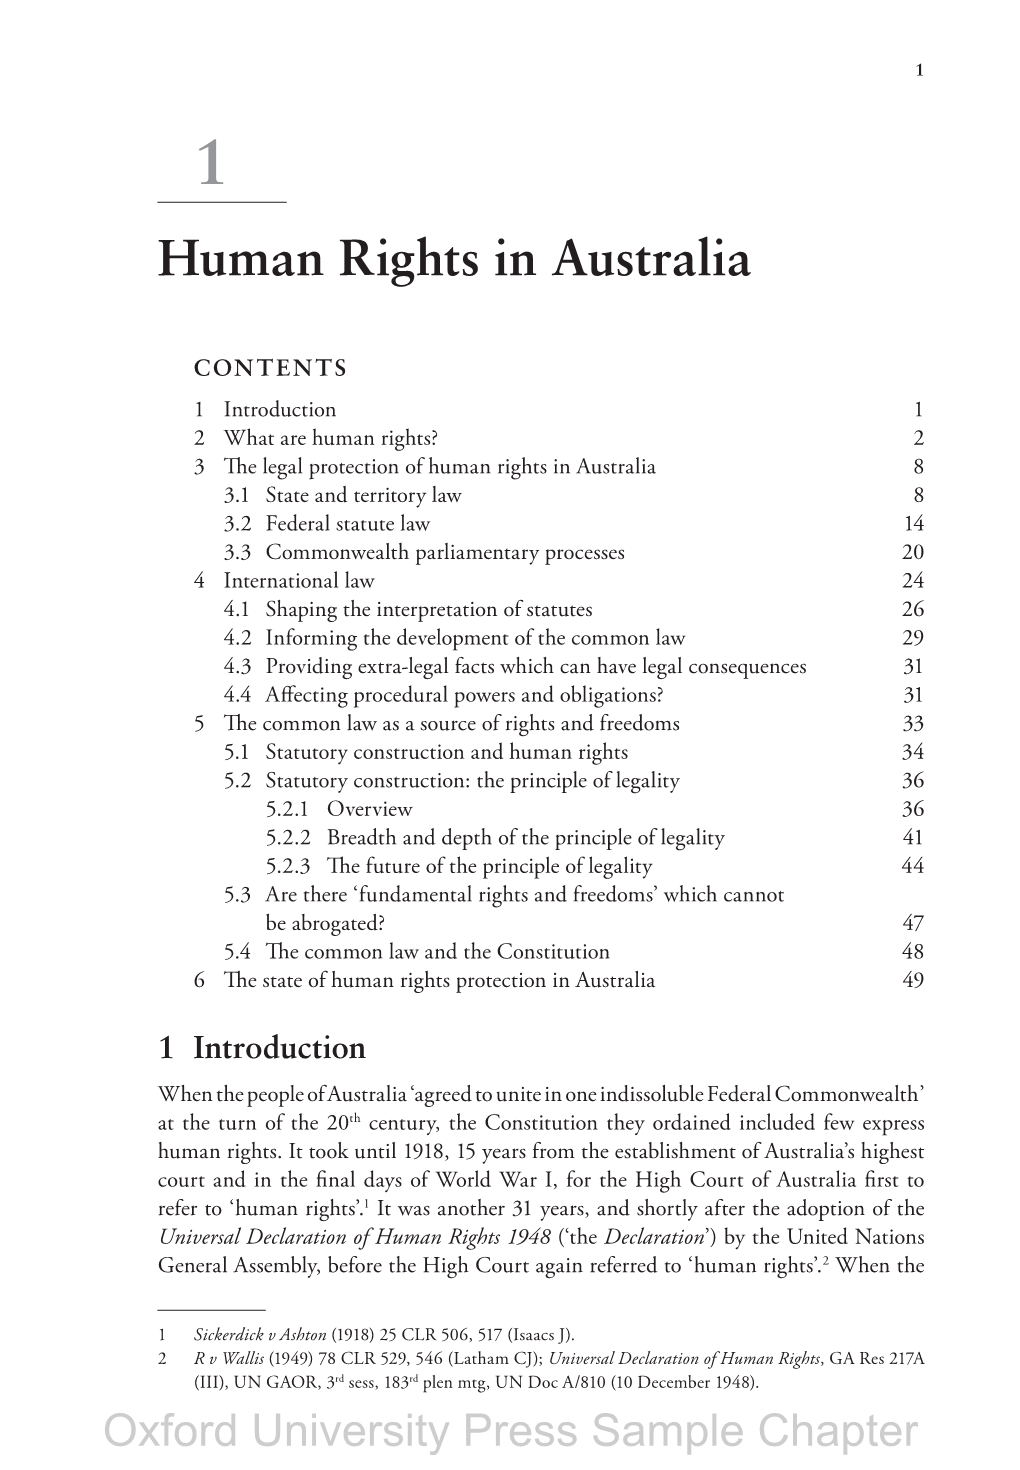 Human Rights in Australia